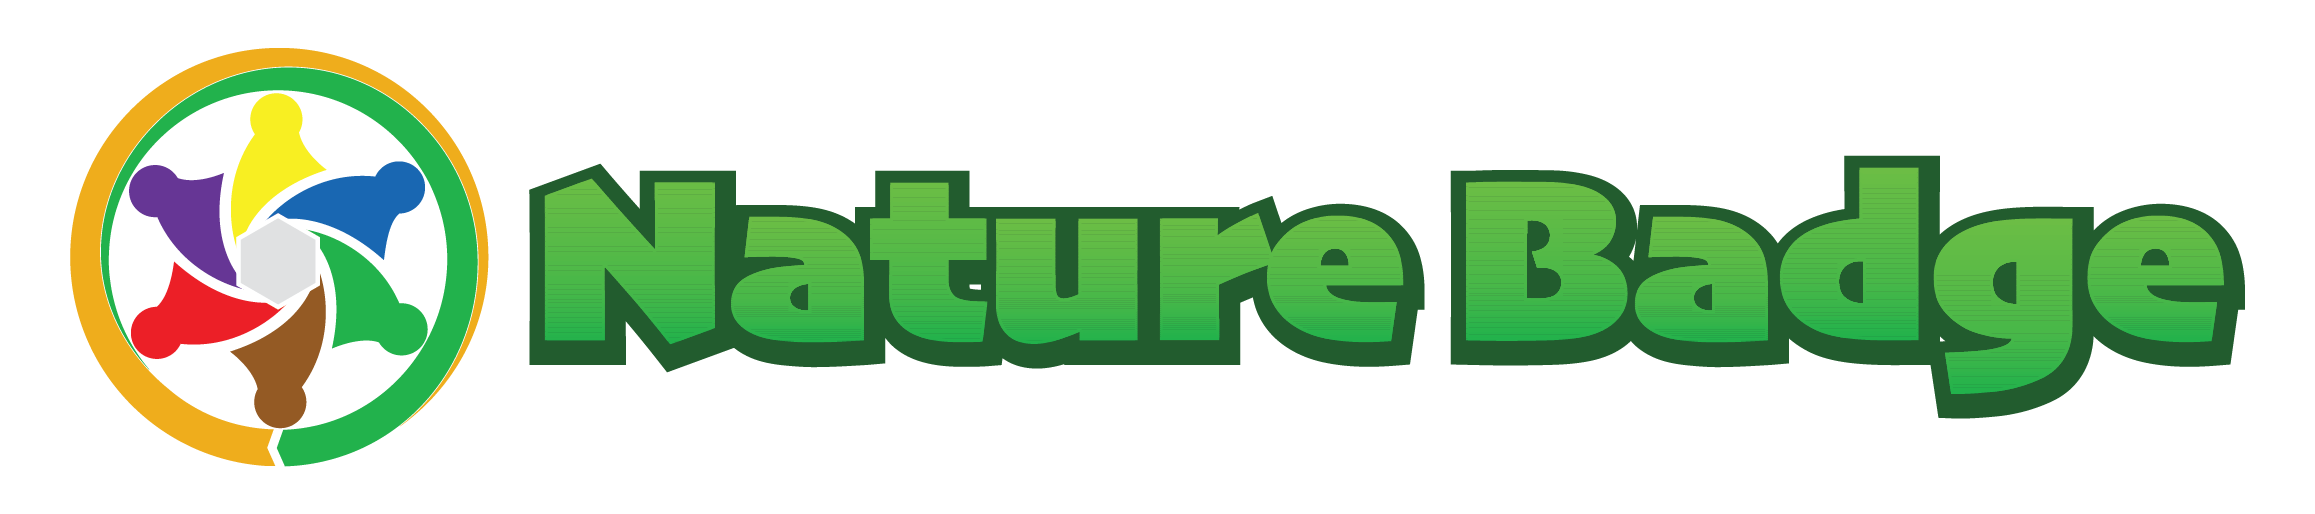 Nature Badge Logo